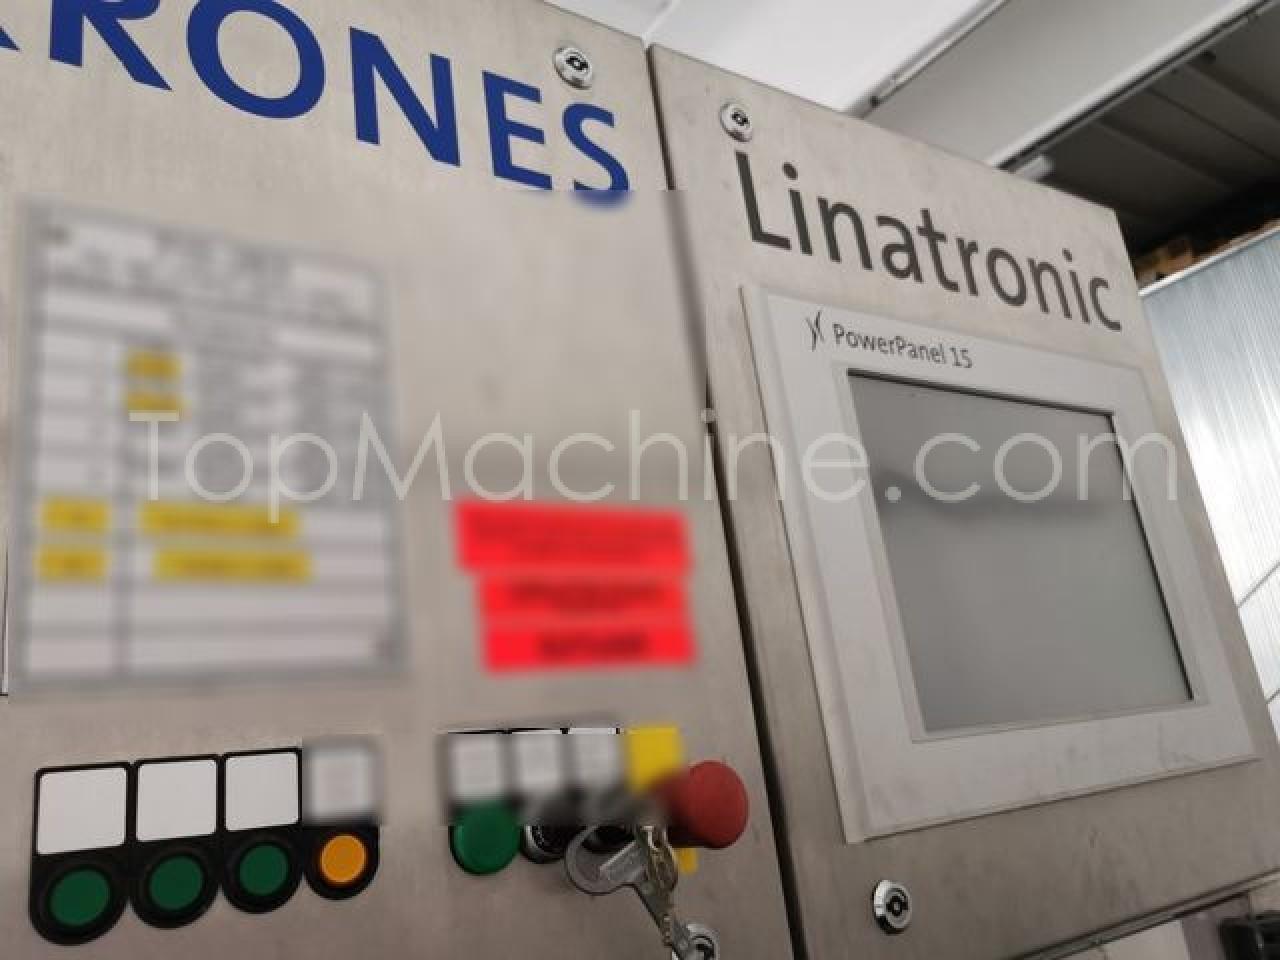 Used Krones Linatronic Bibite e Liquidi Varie